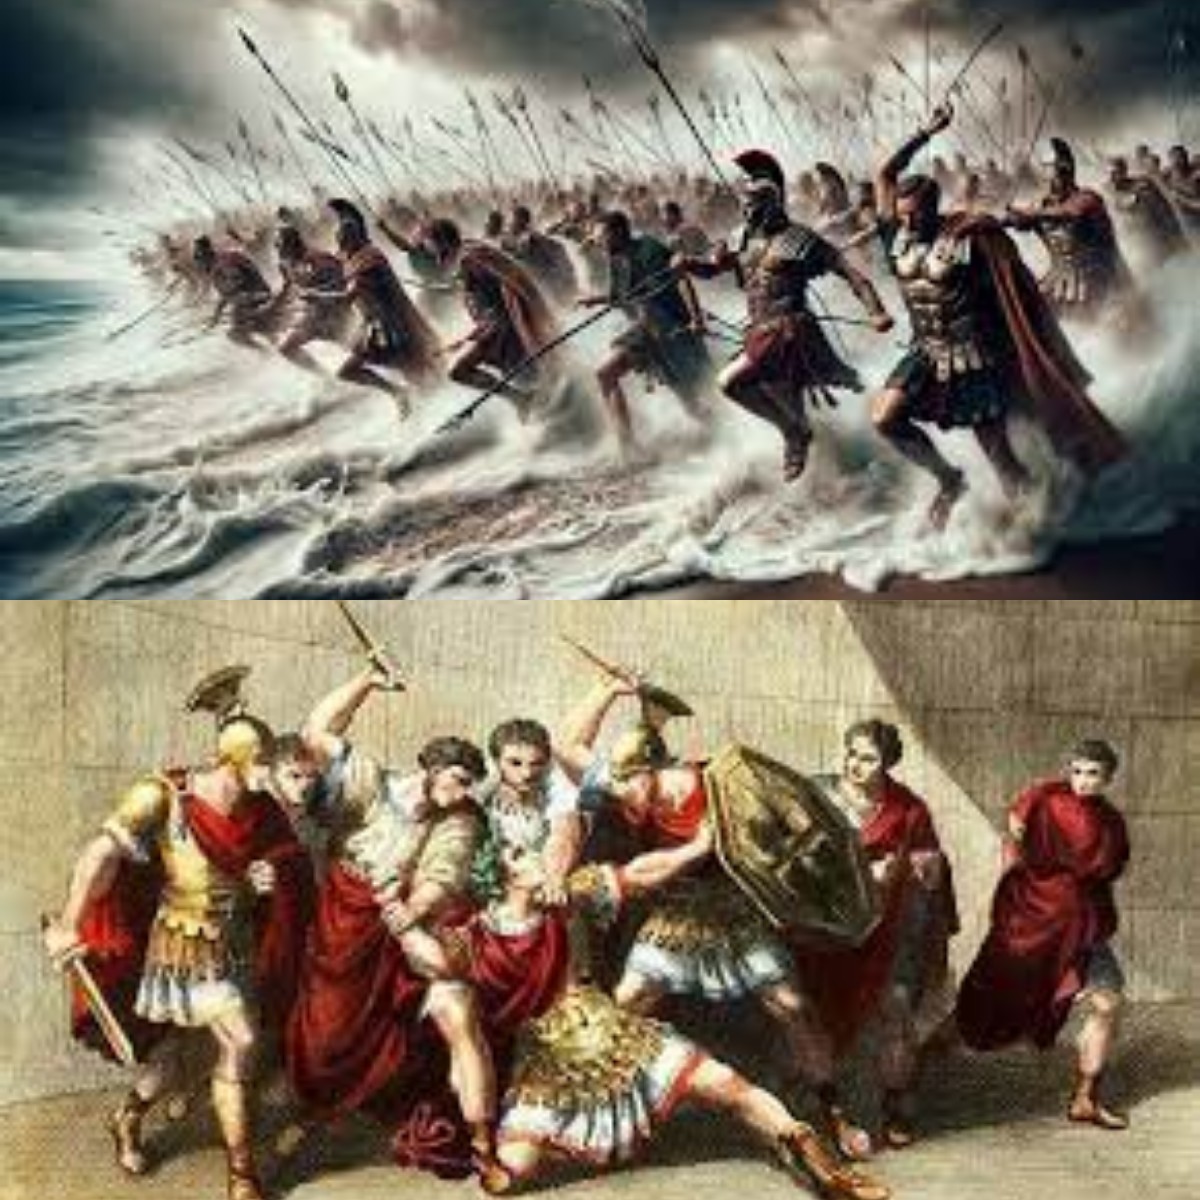 Sejarah Romawi Kuno: Inilah Kisah Peperangan Paling Gila Sepanjang Masa Perang Kekaisaran Caligula 